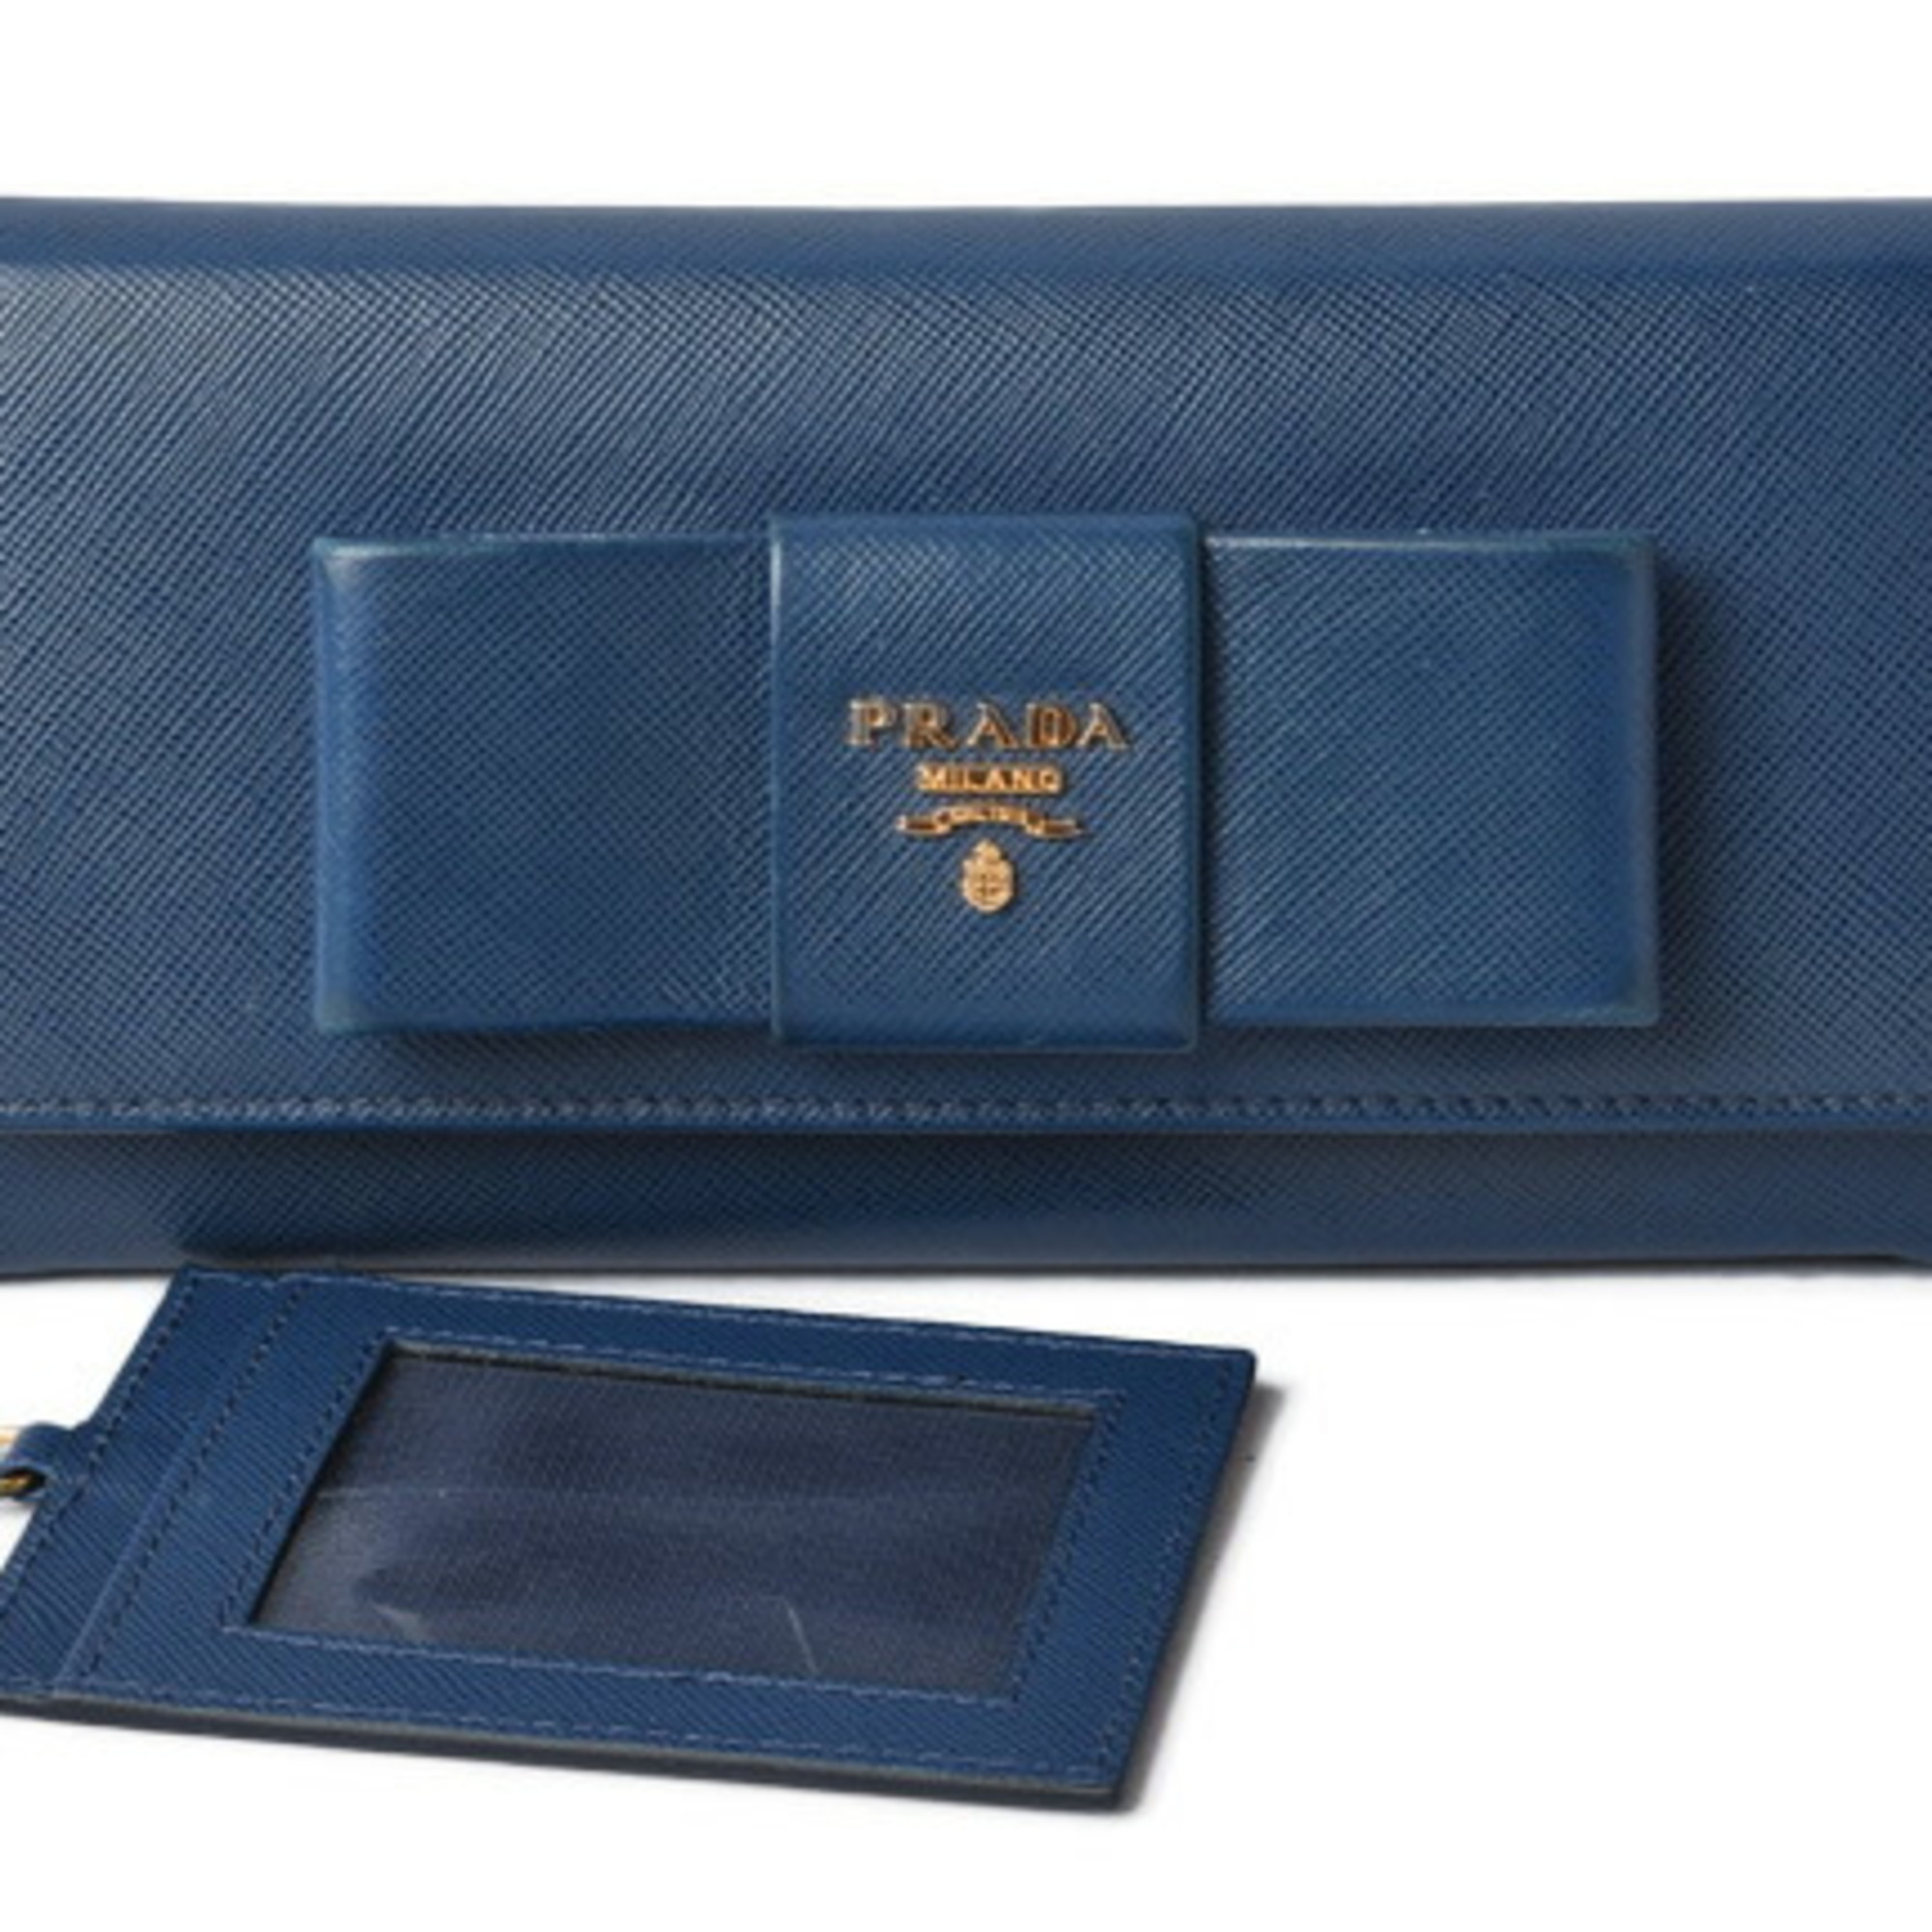 Prada wallet PRADA long 1MH132 BLUETTE blue SAFFIANO FIOCCO embossed leather